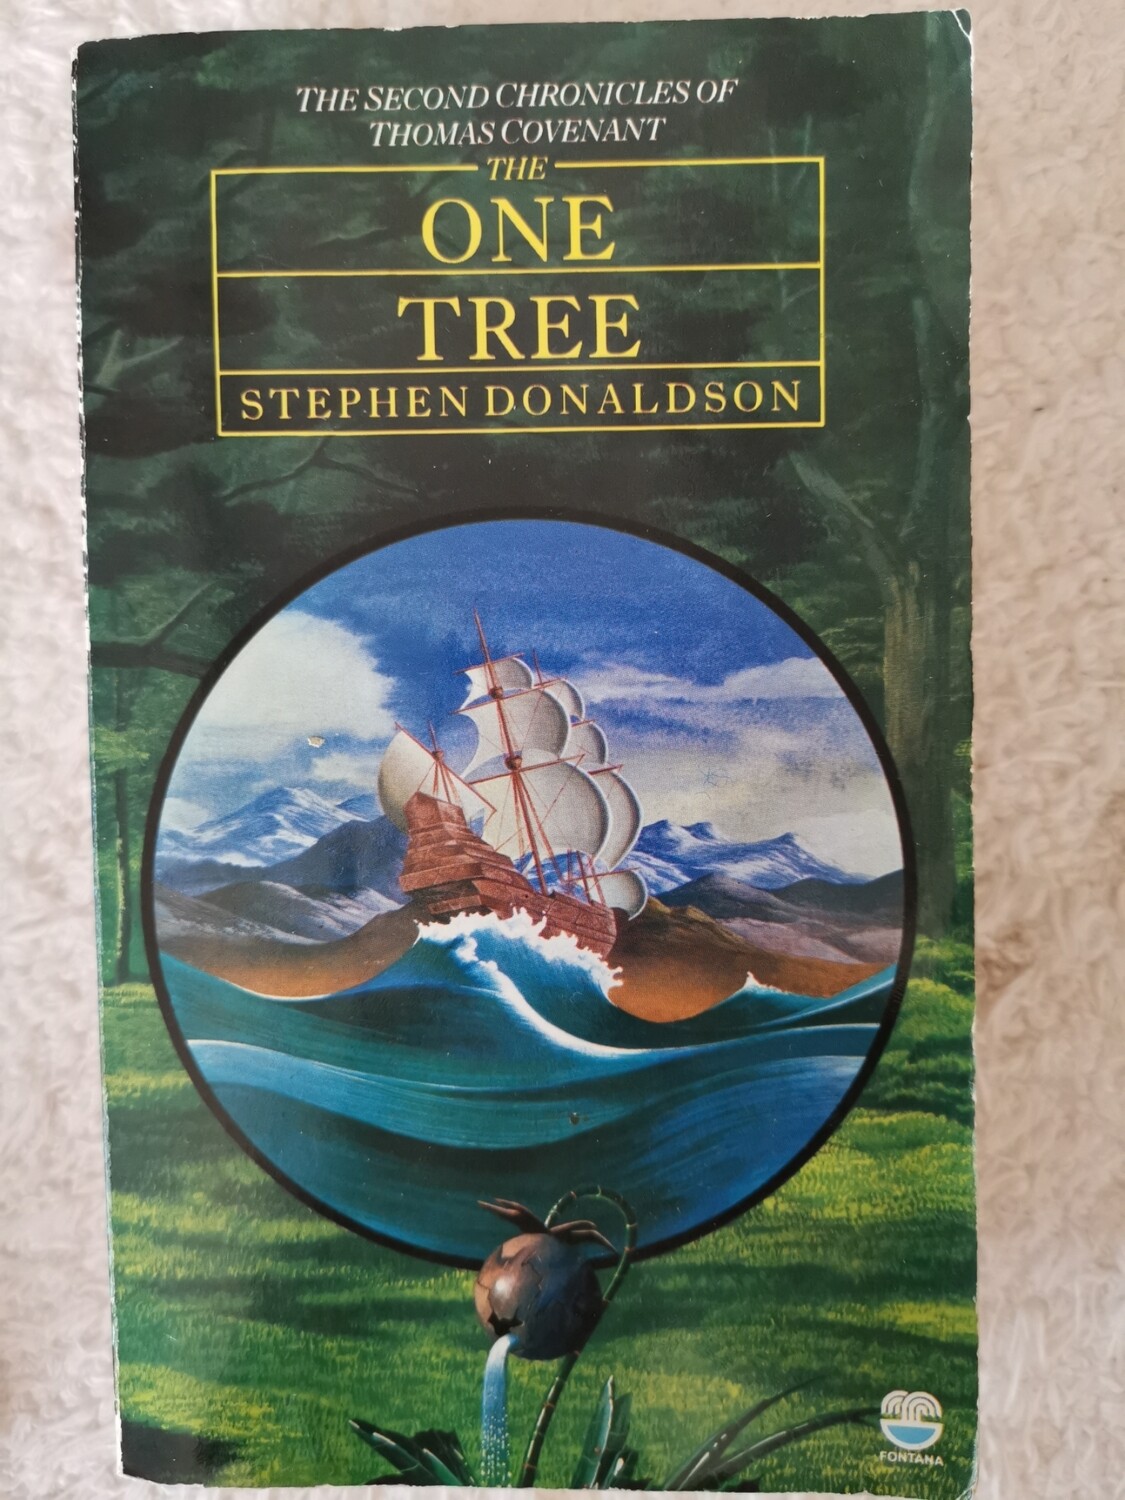 The one tree, Stephen Donaldson